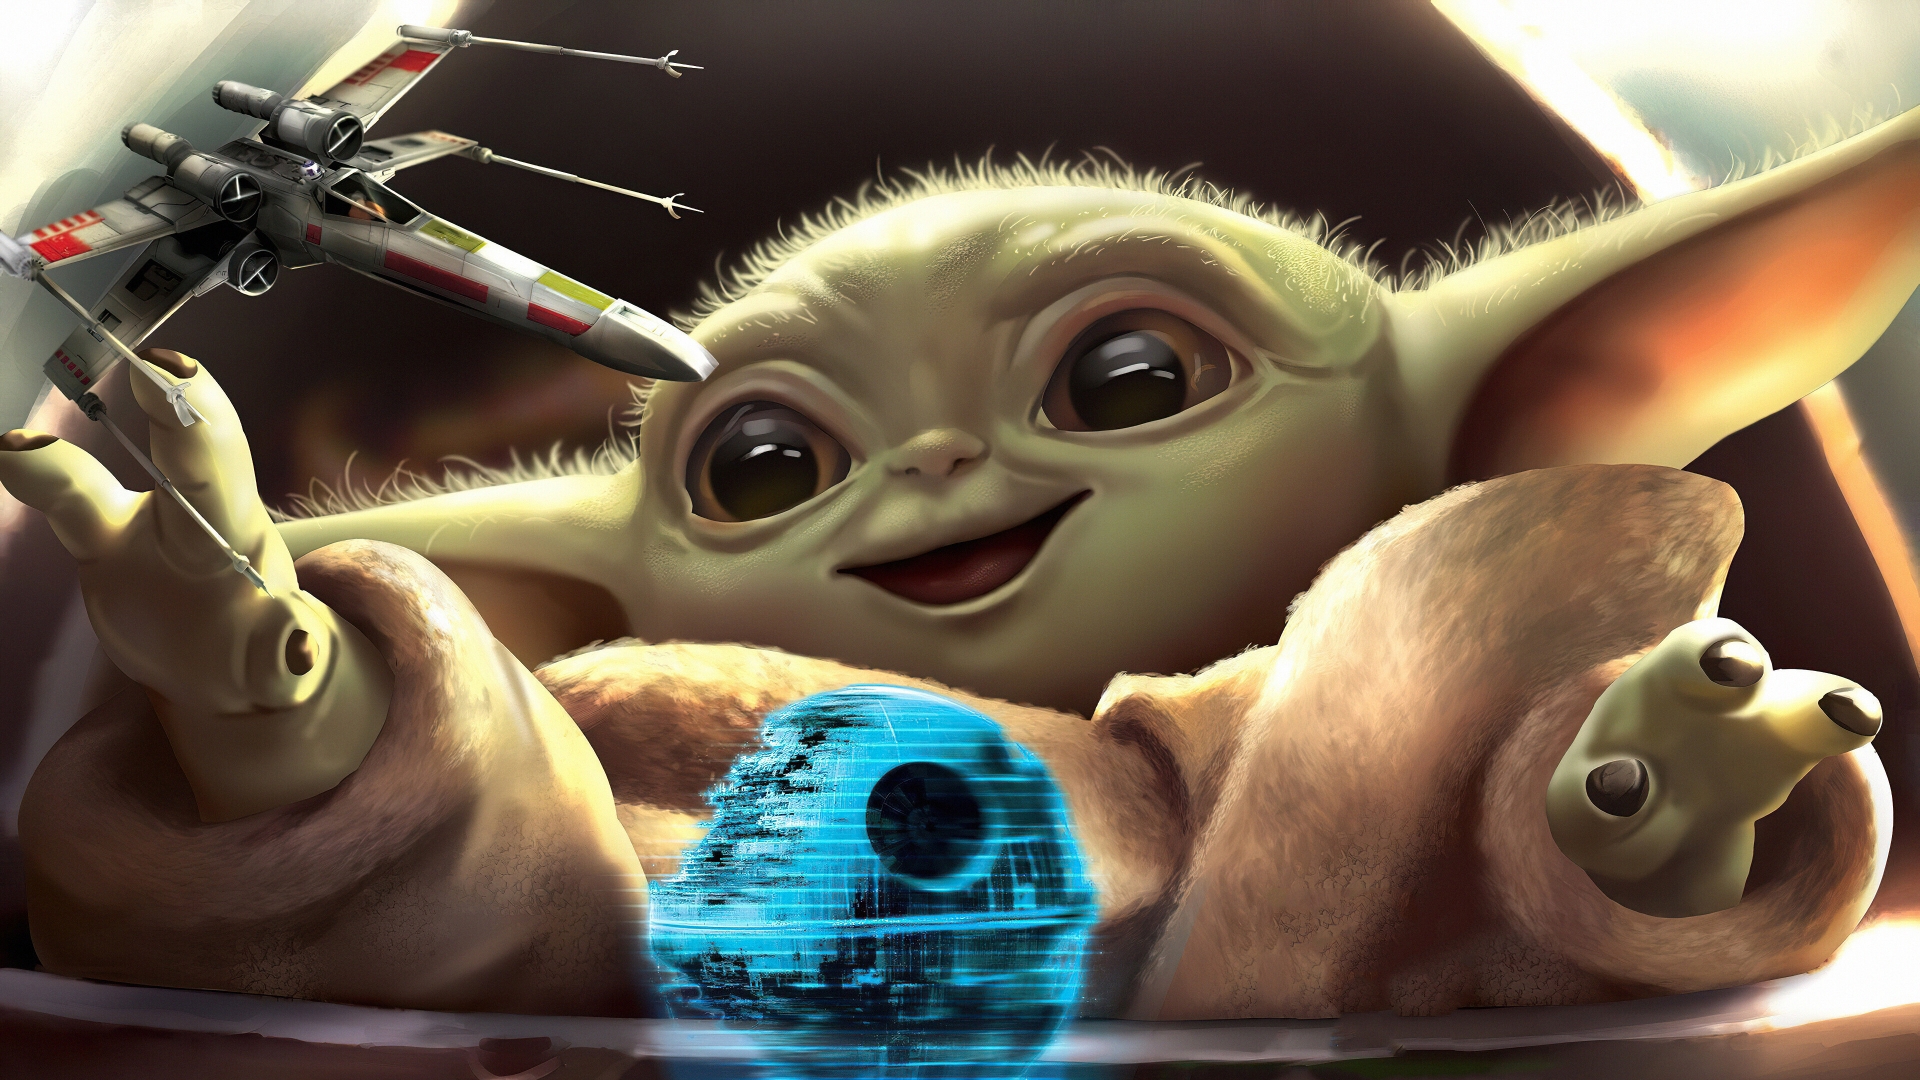 Baby Yoda playing Wallpaper 4k Ultra HD ID:4601